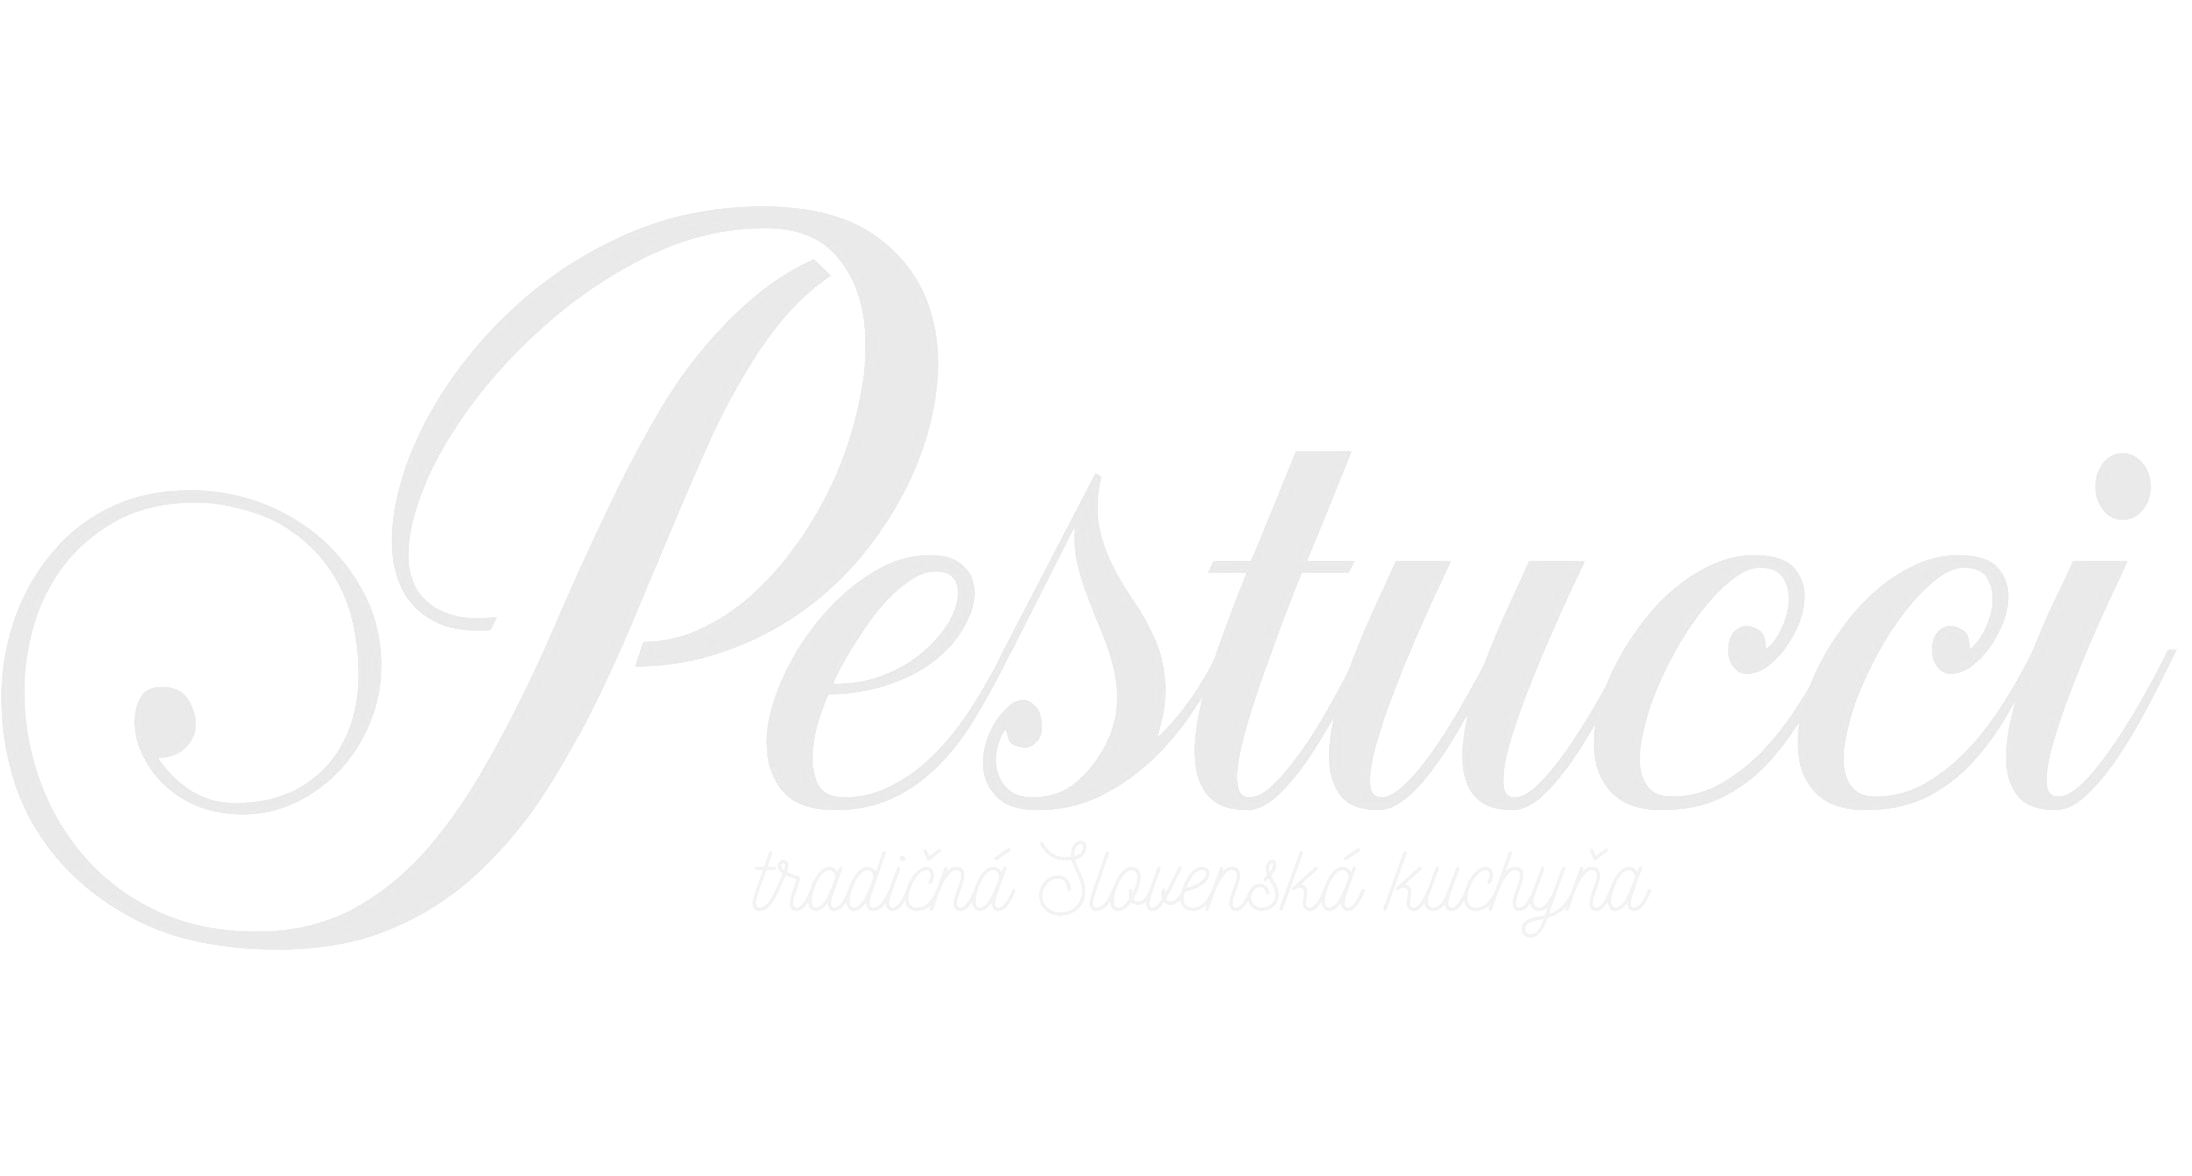 Pestucci